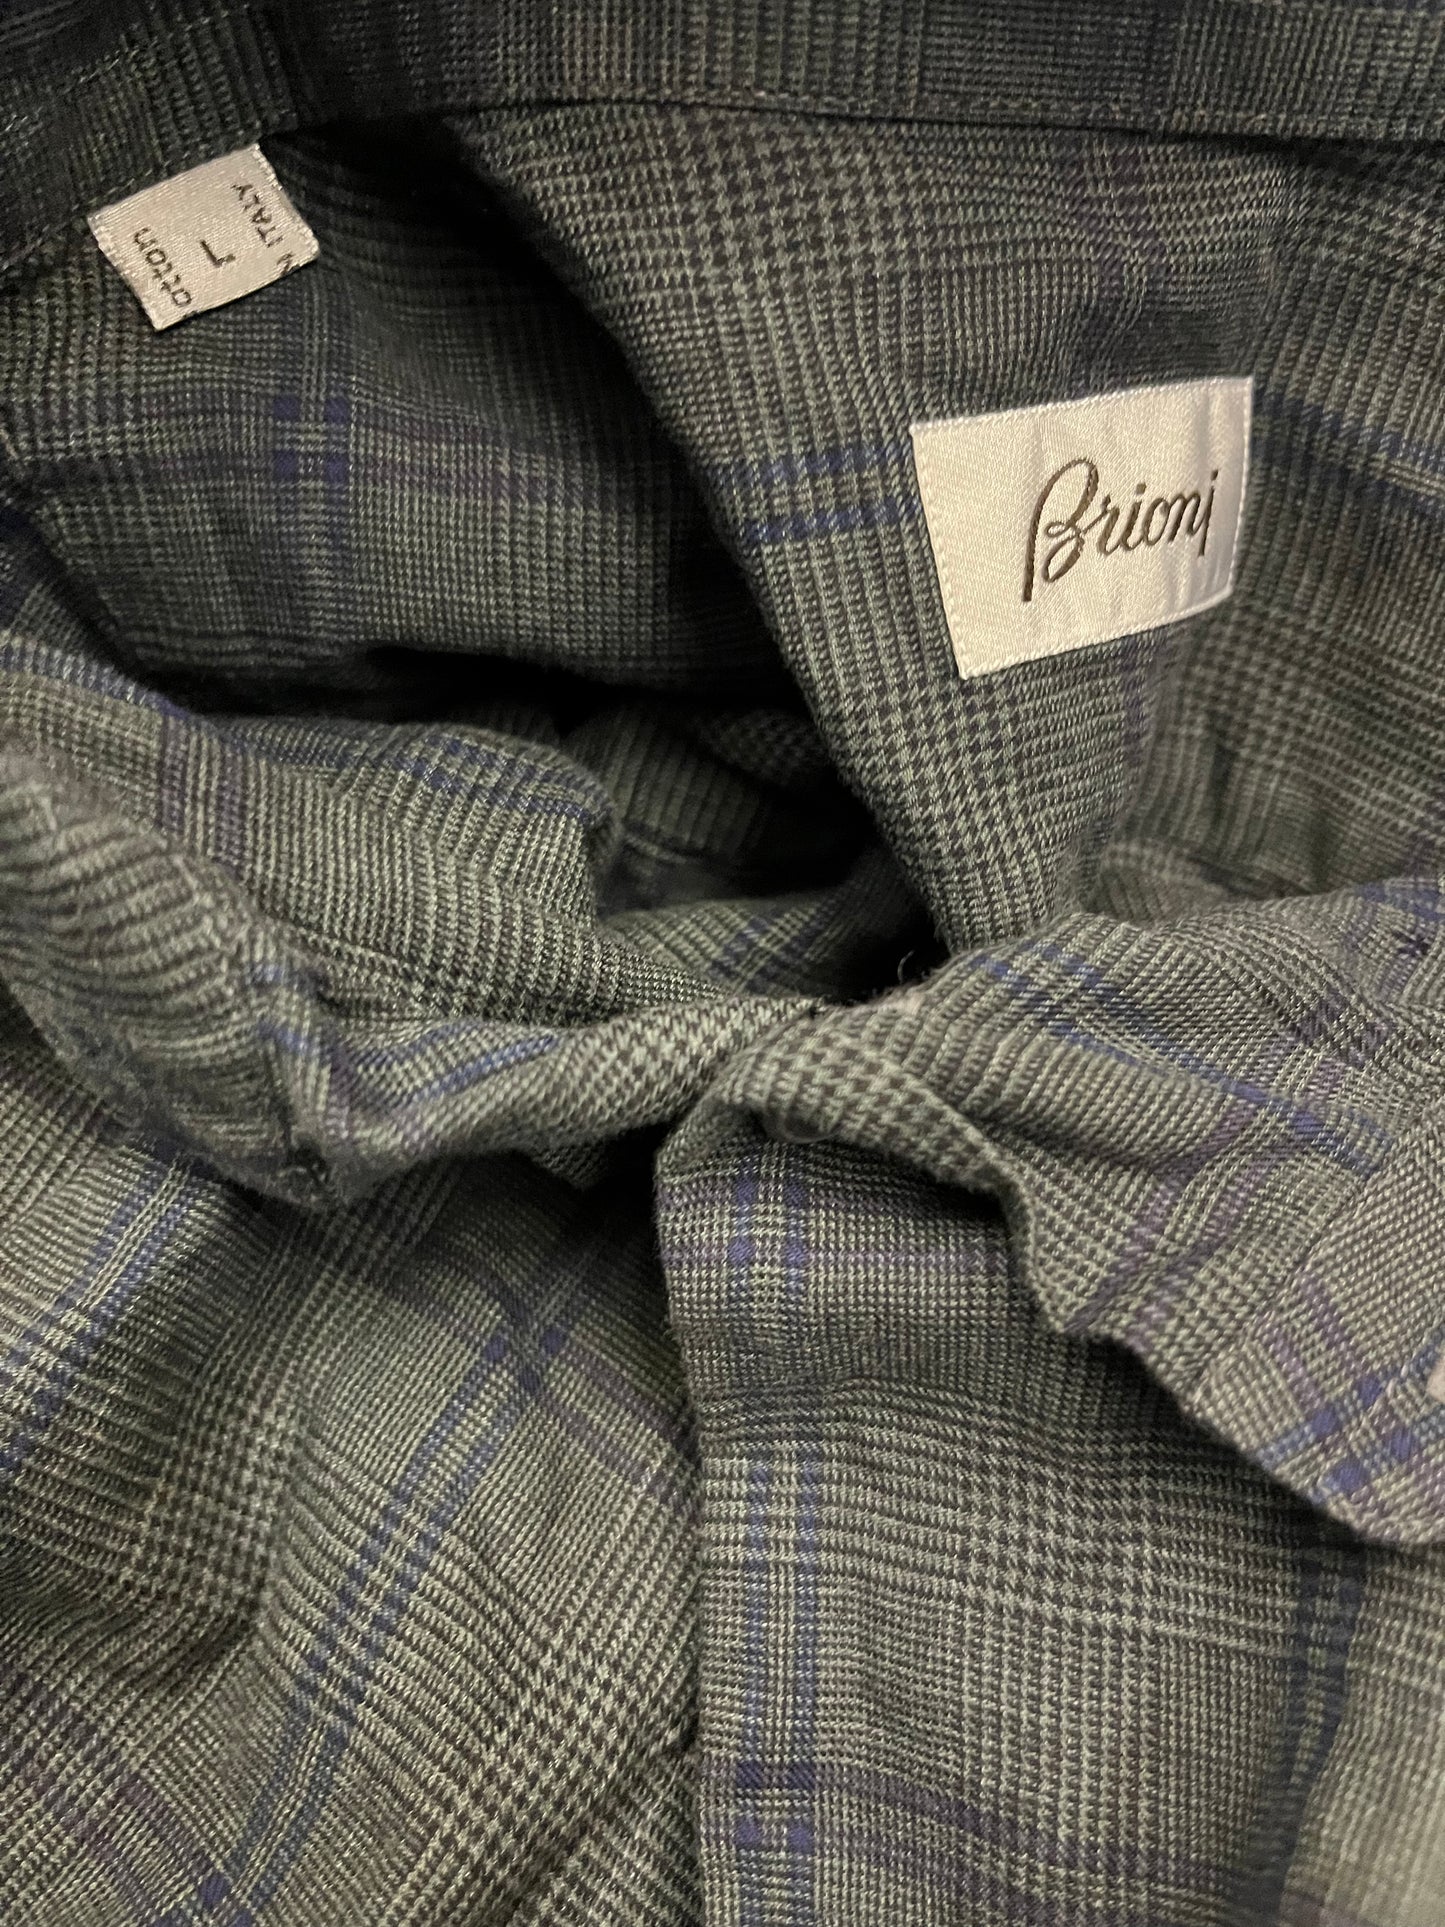 SHADES OF BLUE: Woz's BRIONI of ITALY Designer Long Sleeve Shirt (17)